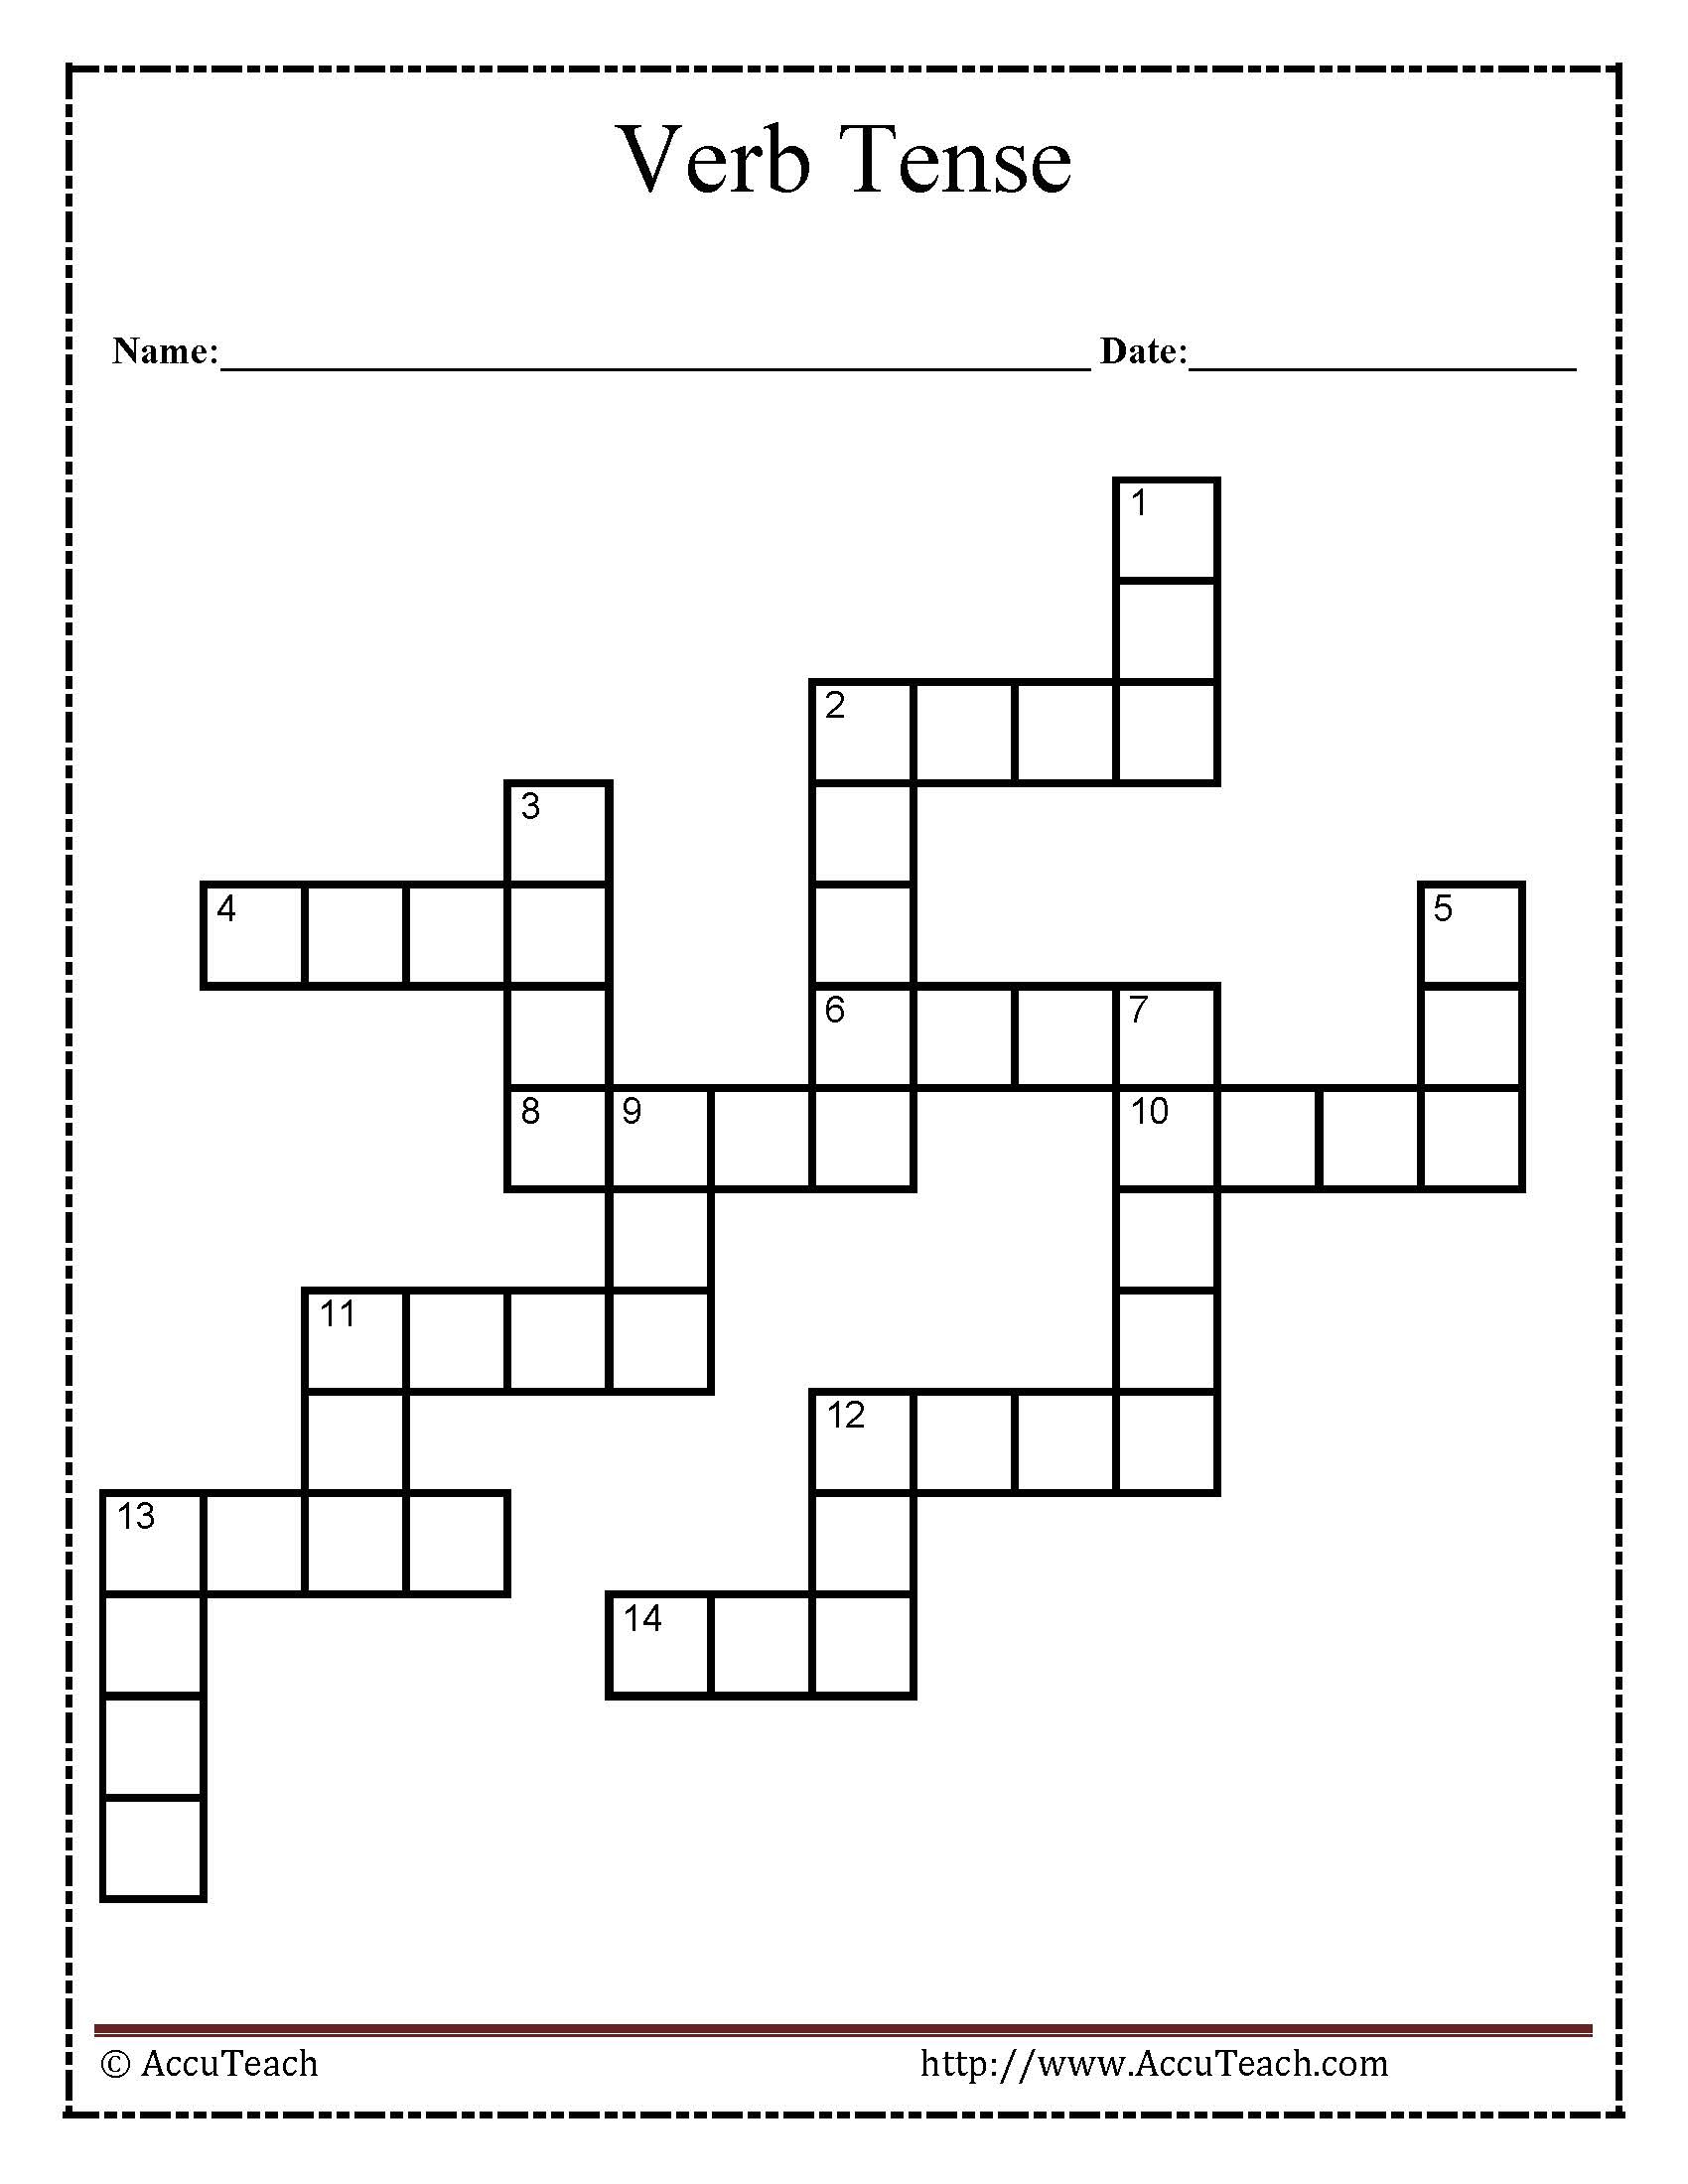 Science 6th Grade Crossword Wordmint Printable Crossword Puzzles 